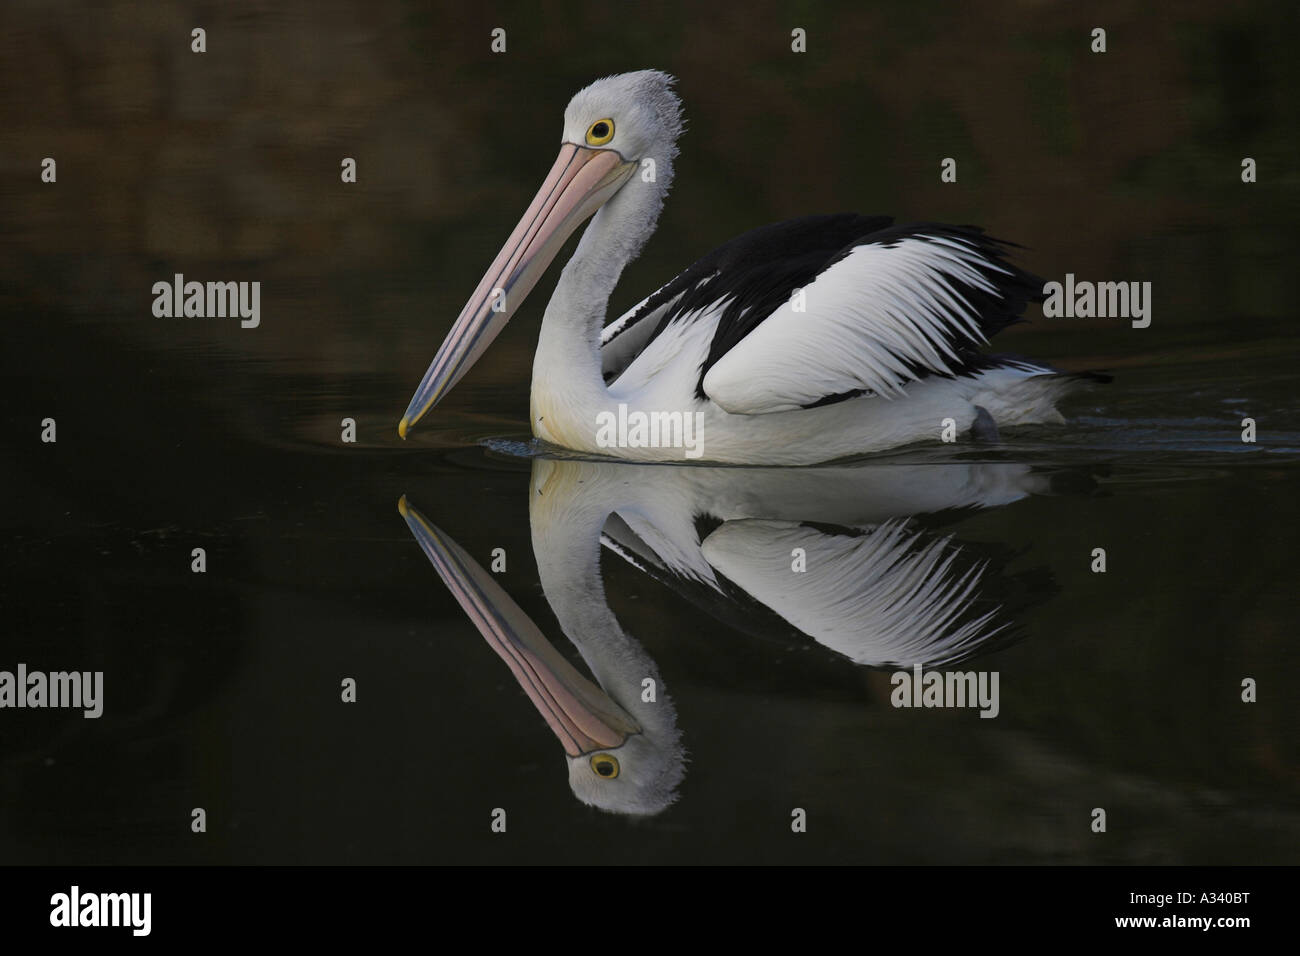 australian pelican, pelecanus conspicillatus, with reflection in water Stock Photo